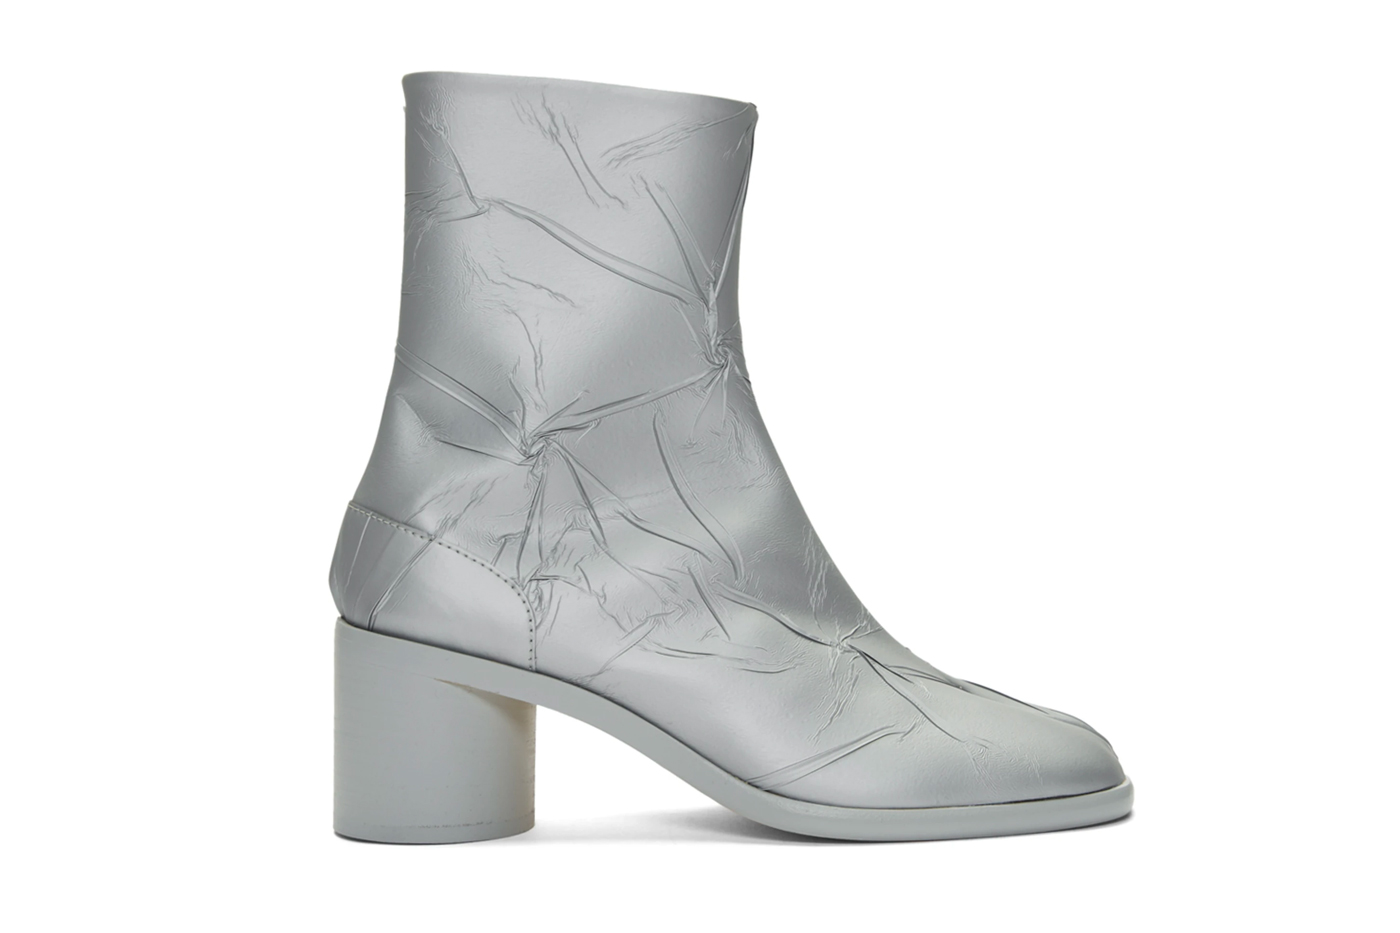 margiela silver boots